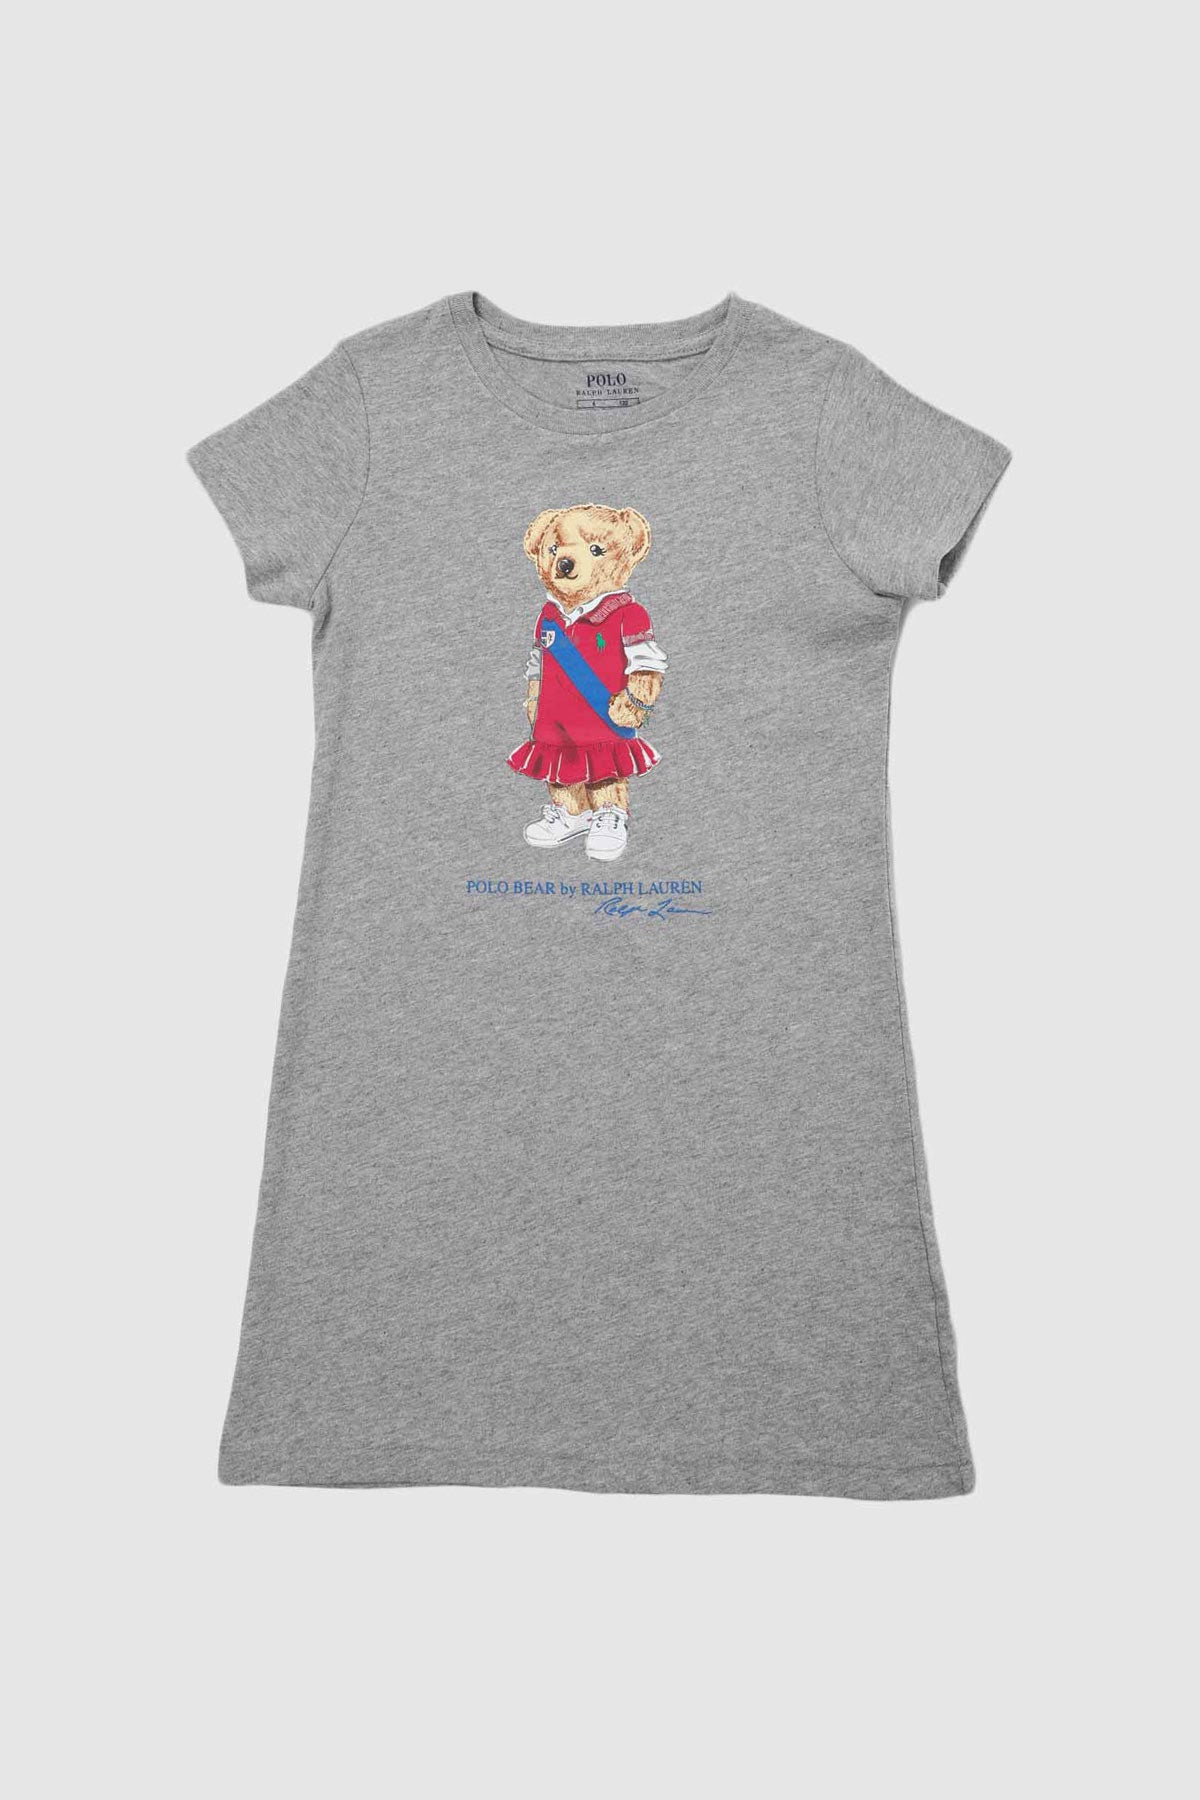 Polo Ralph Lauren 5-6.5 Yaş Kız Çocuk Polo Bear T-shirt Elbise-Libas Trendy Fashion Store